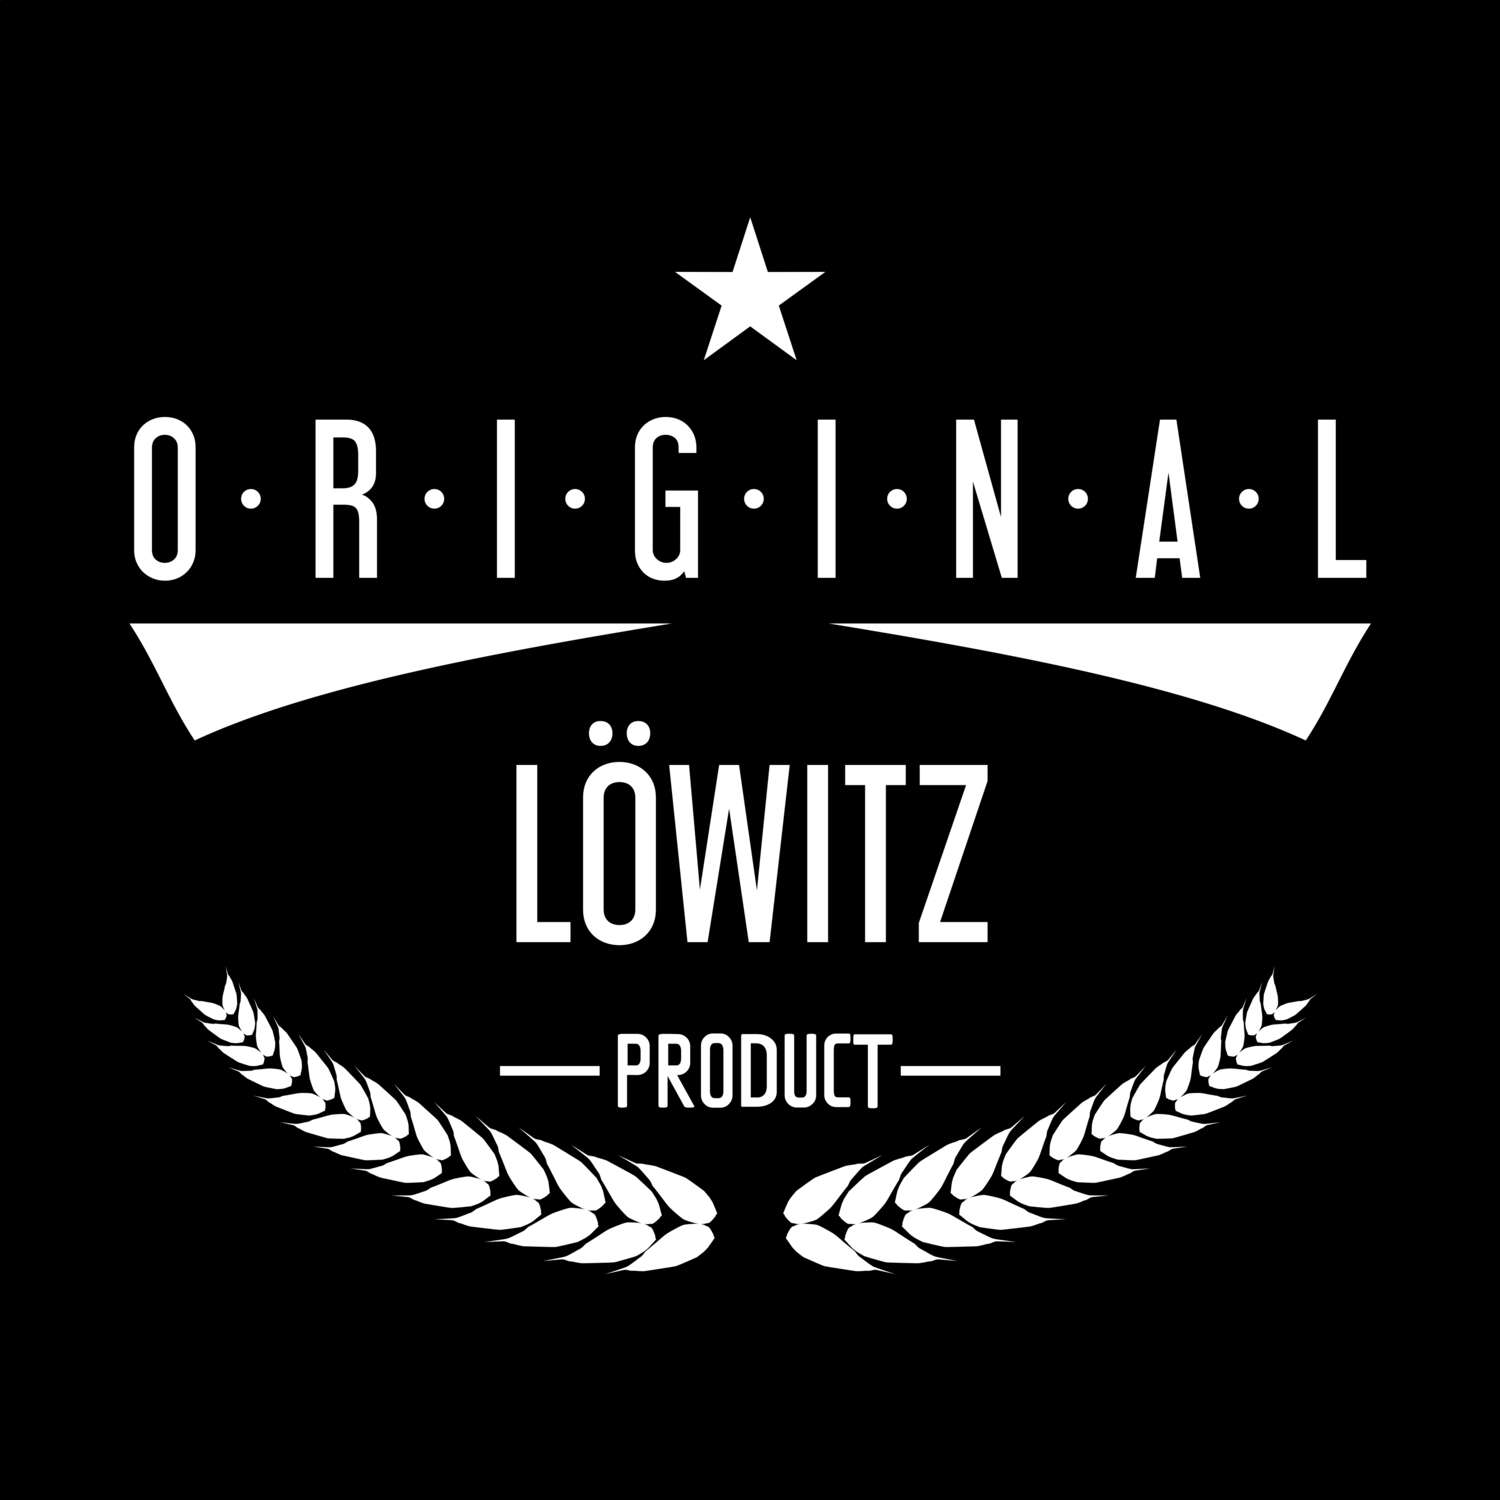 Löwitz T-Shirt »Original Product«